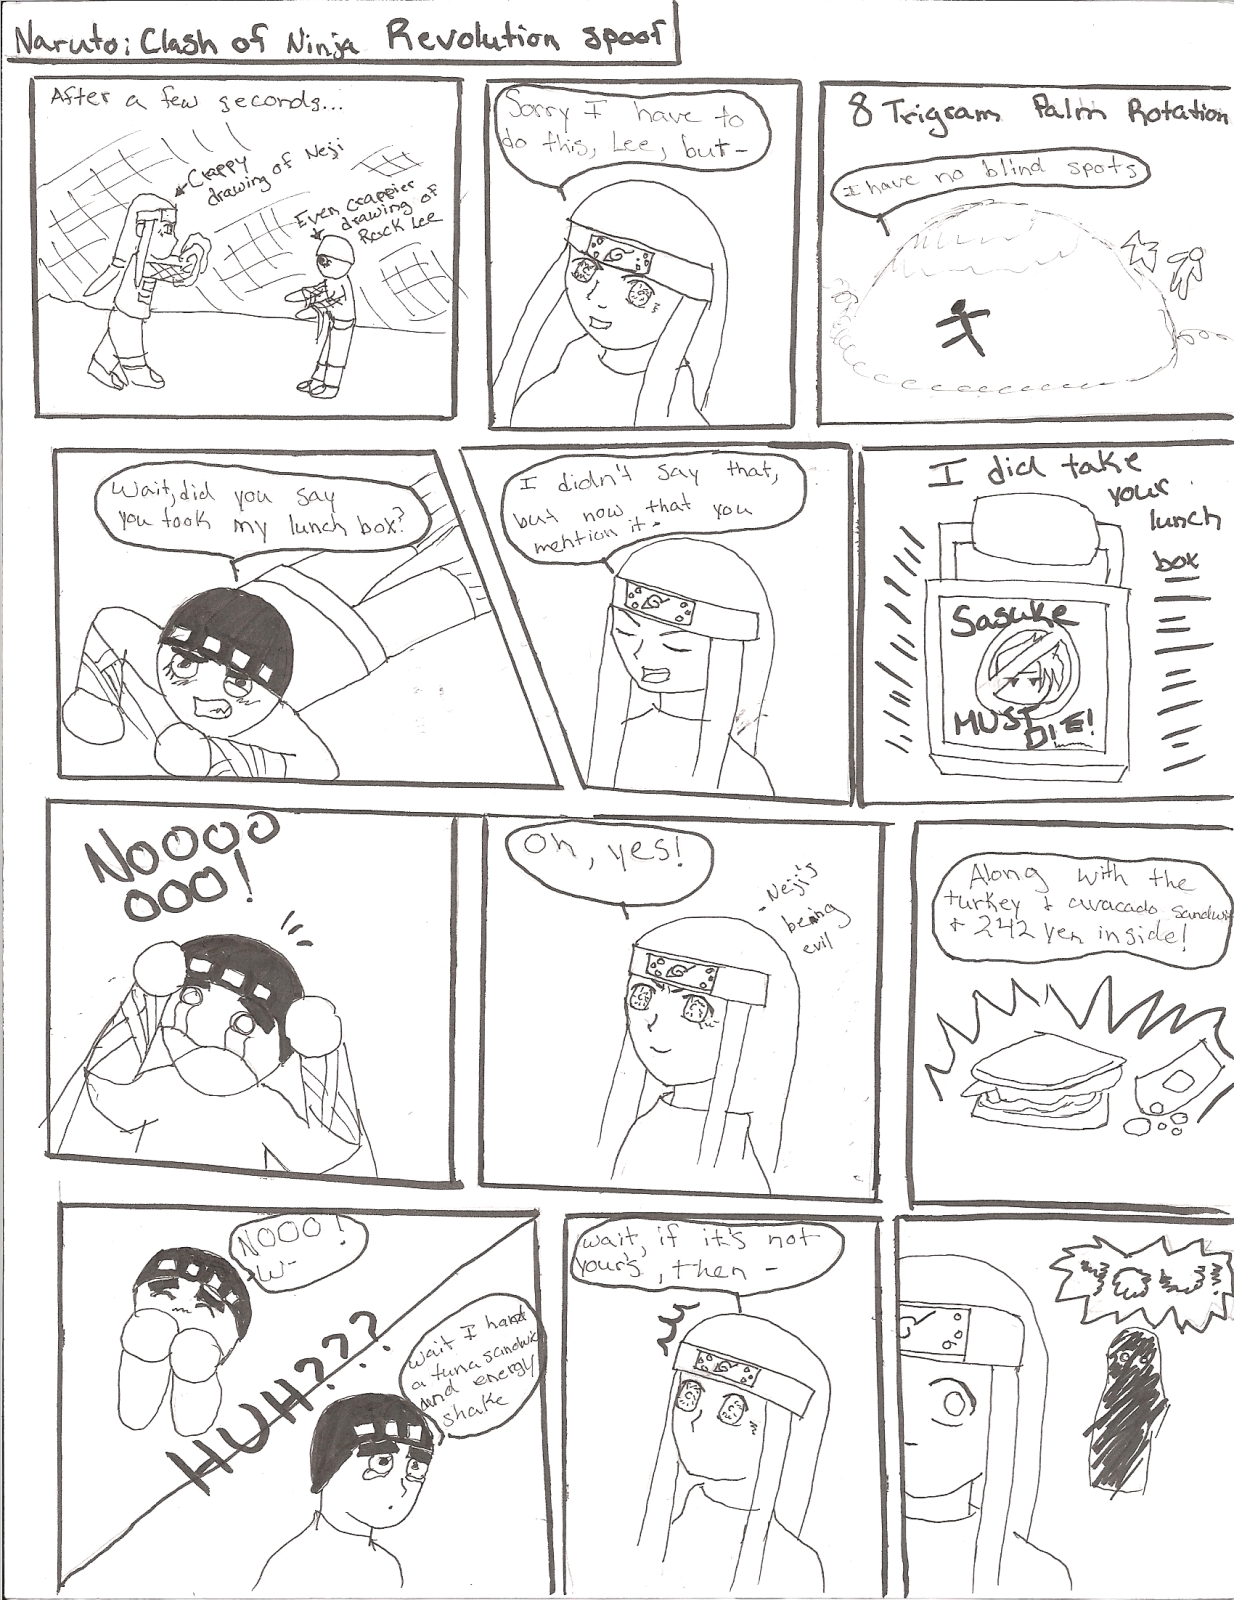 Naruto: Clash of Ninja Revolution spoof (page 1) by chichirifan92